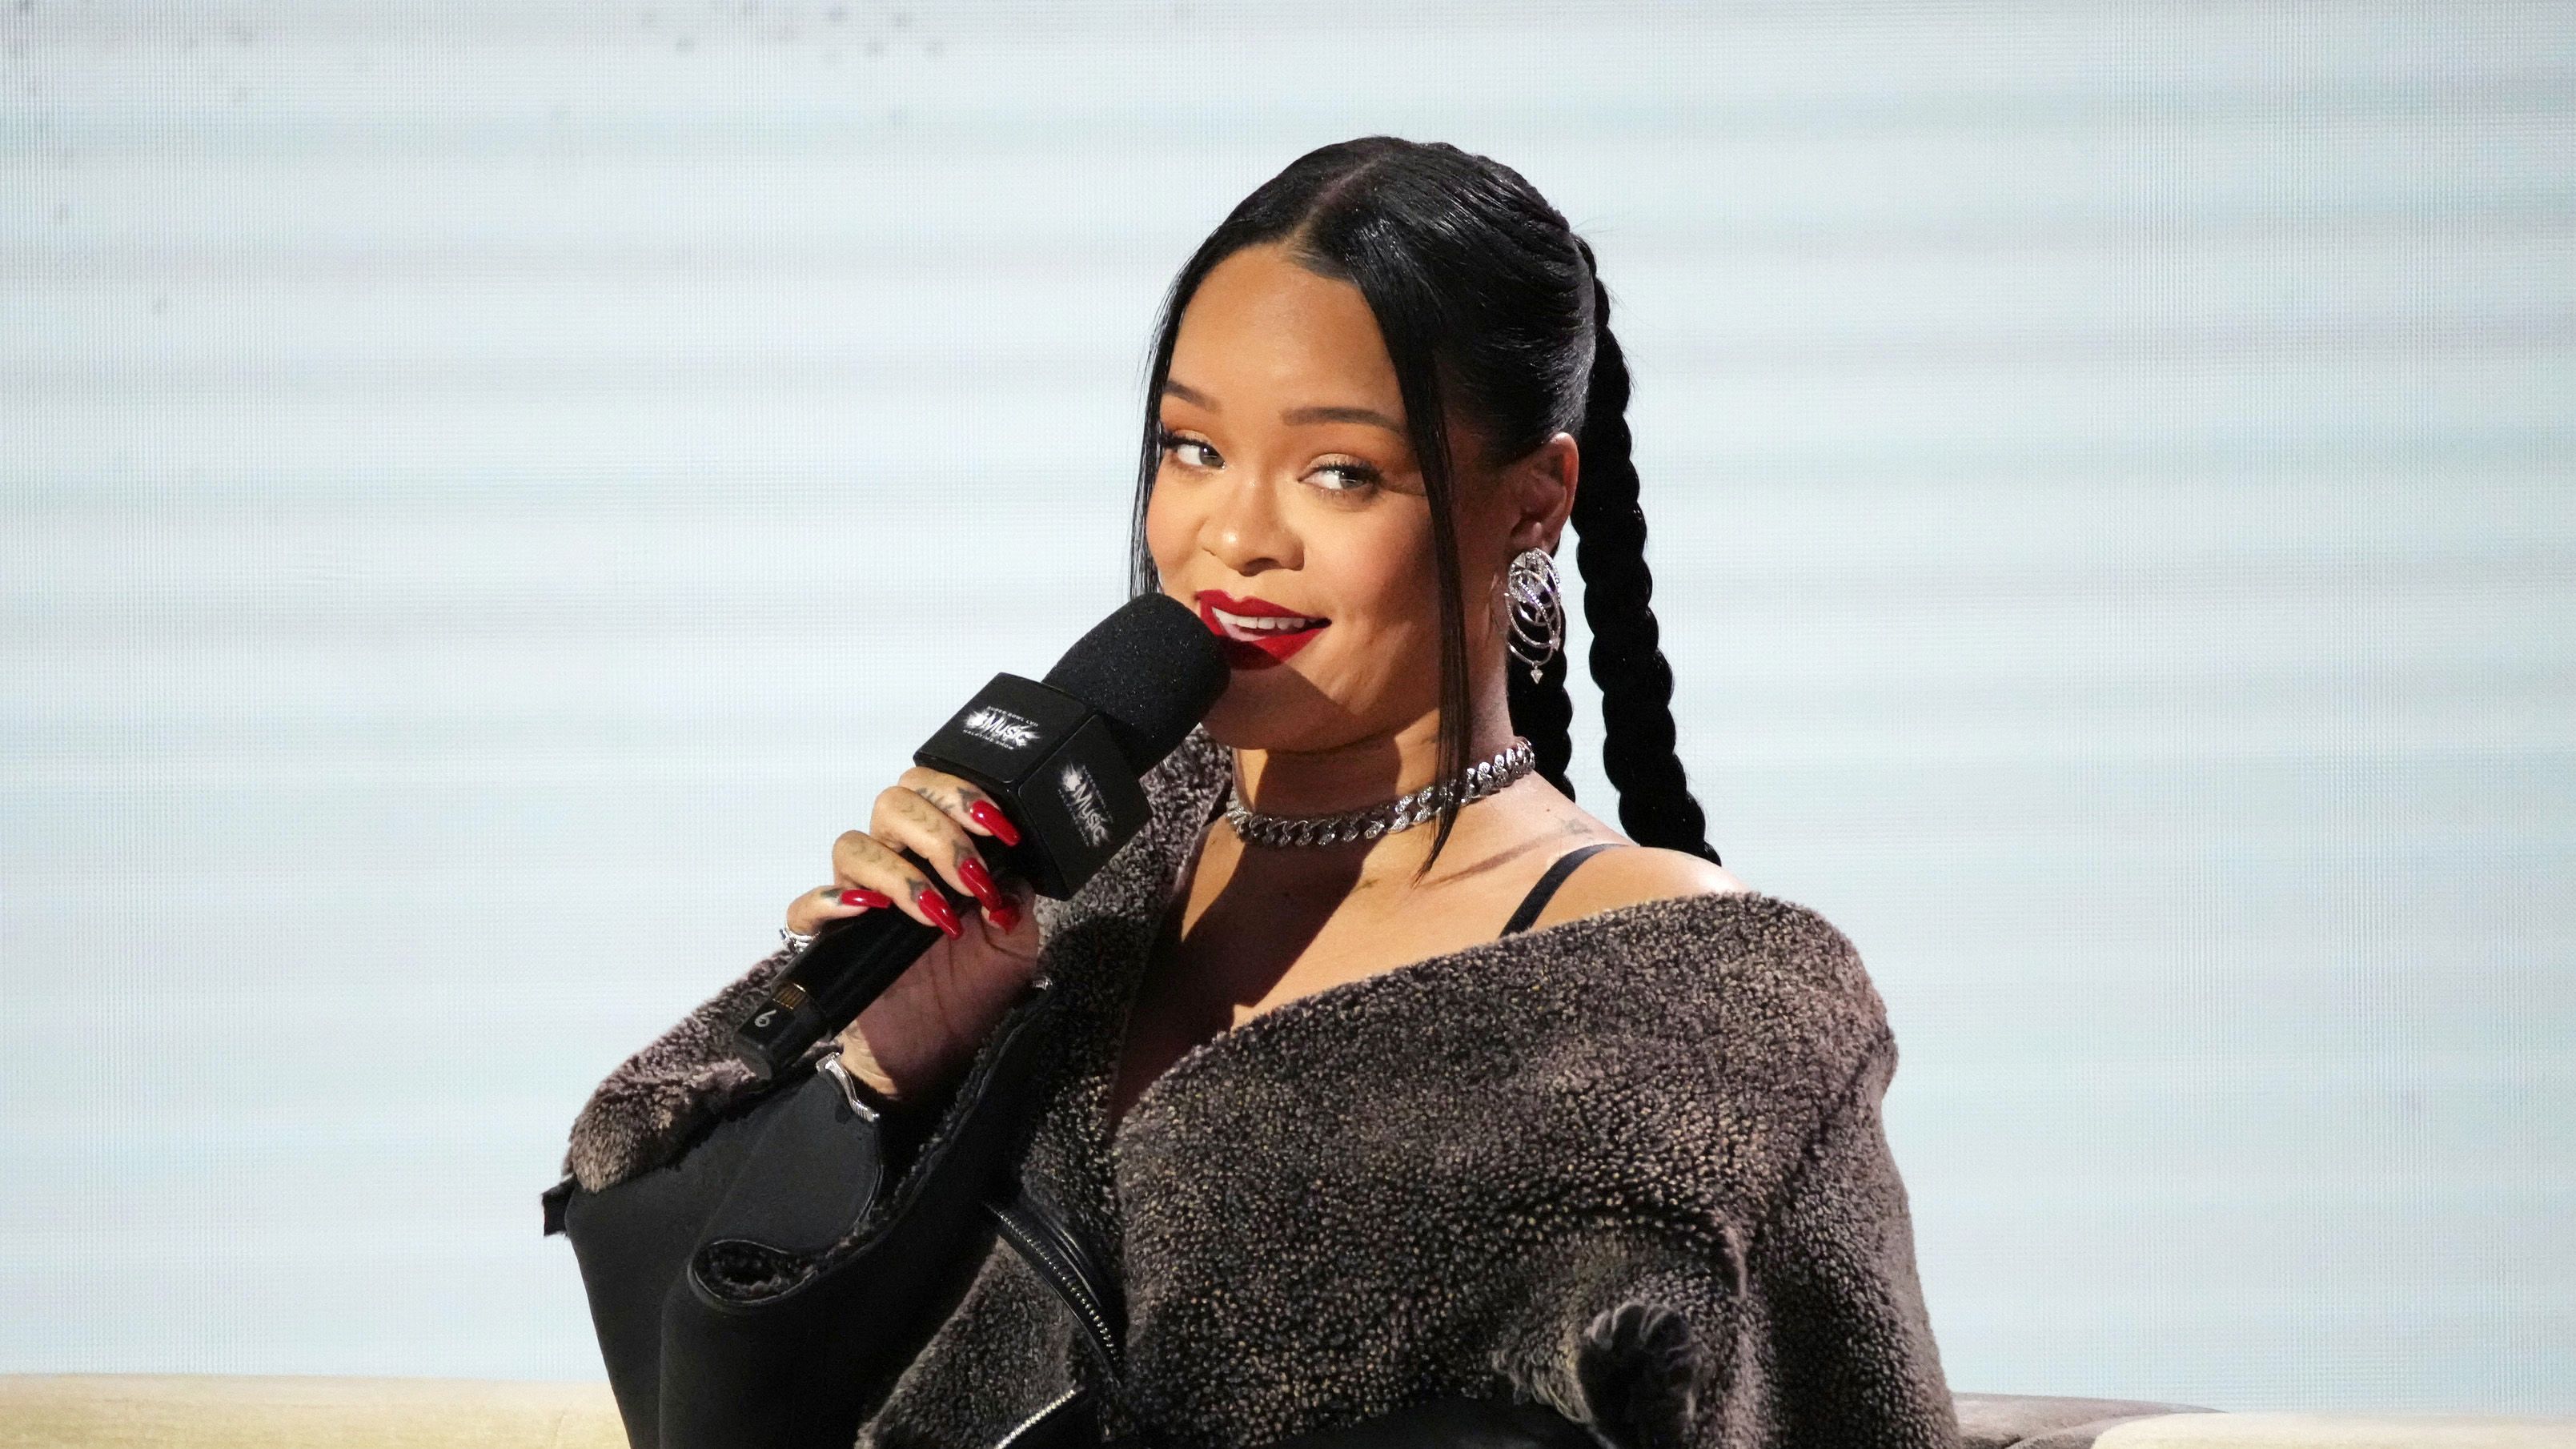 Rihanna music, stats and more